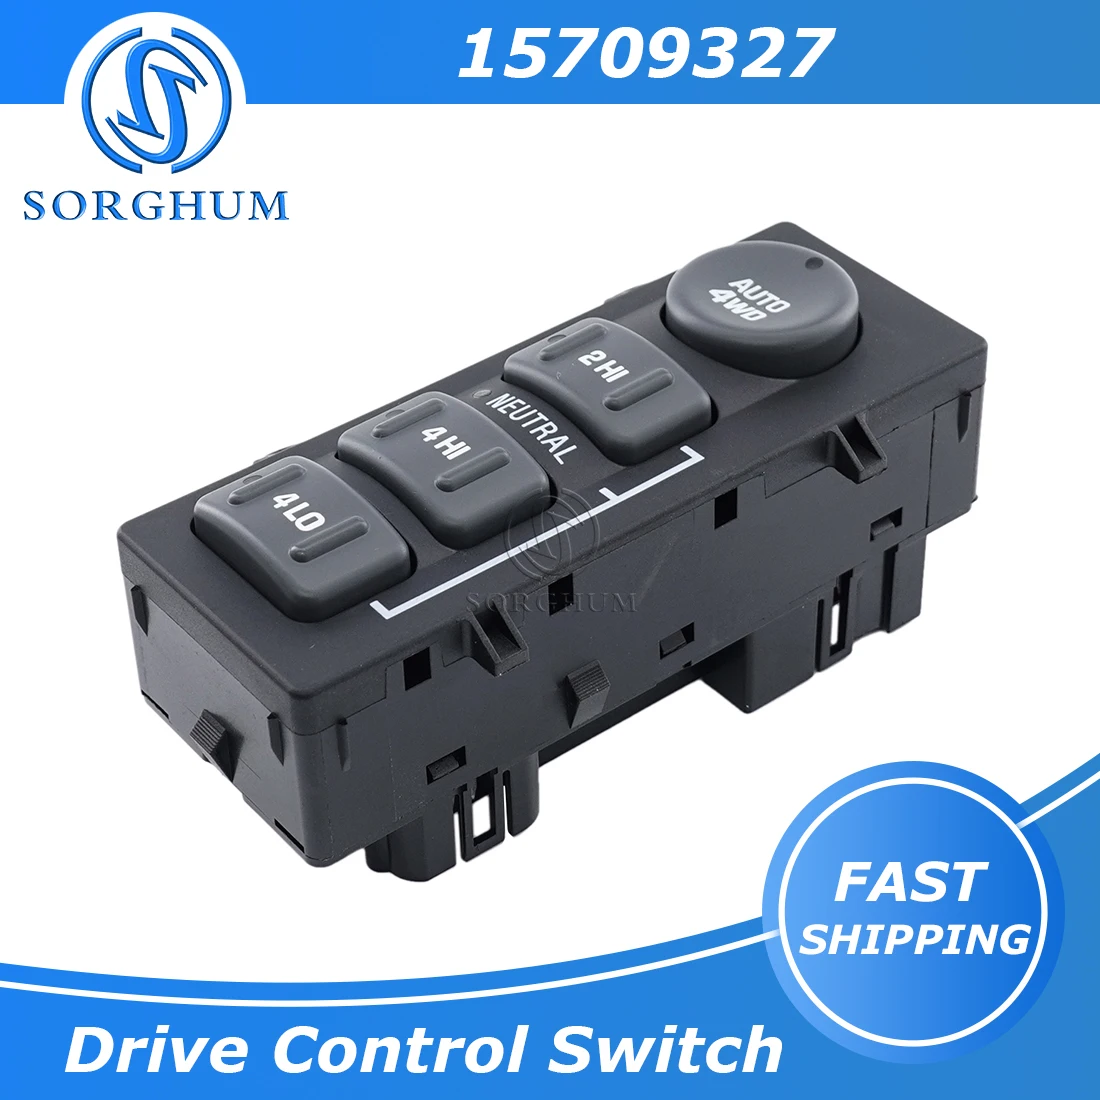 

Sorghum 19168767 4WD Wheel Drive Control Switch Button For Chevrolet Silverado Avalanche Suburban For GMC Sierra Yukon 15709327